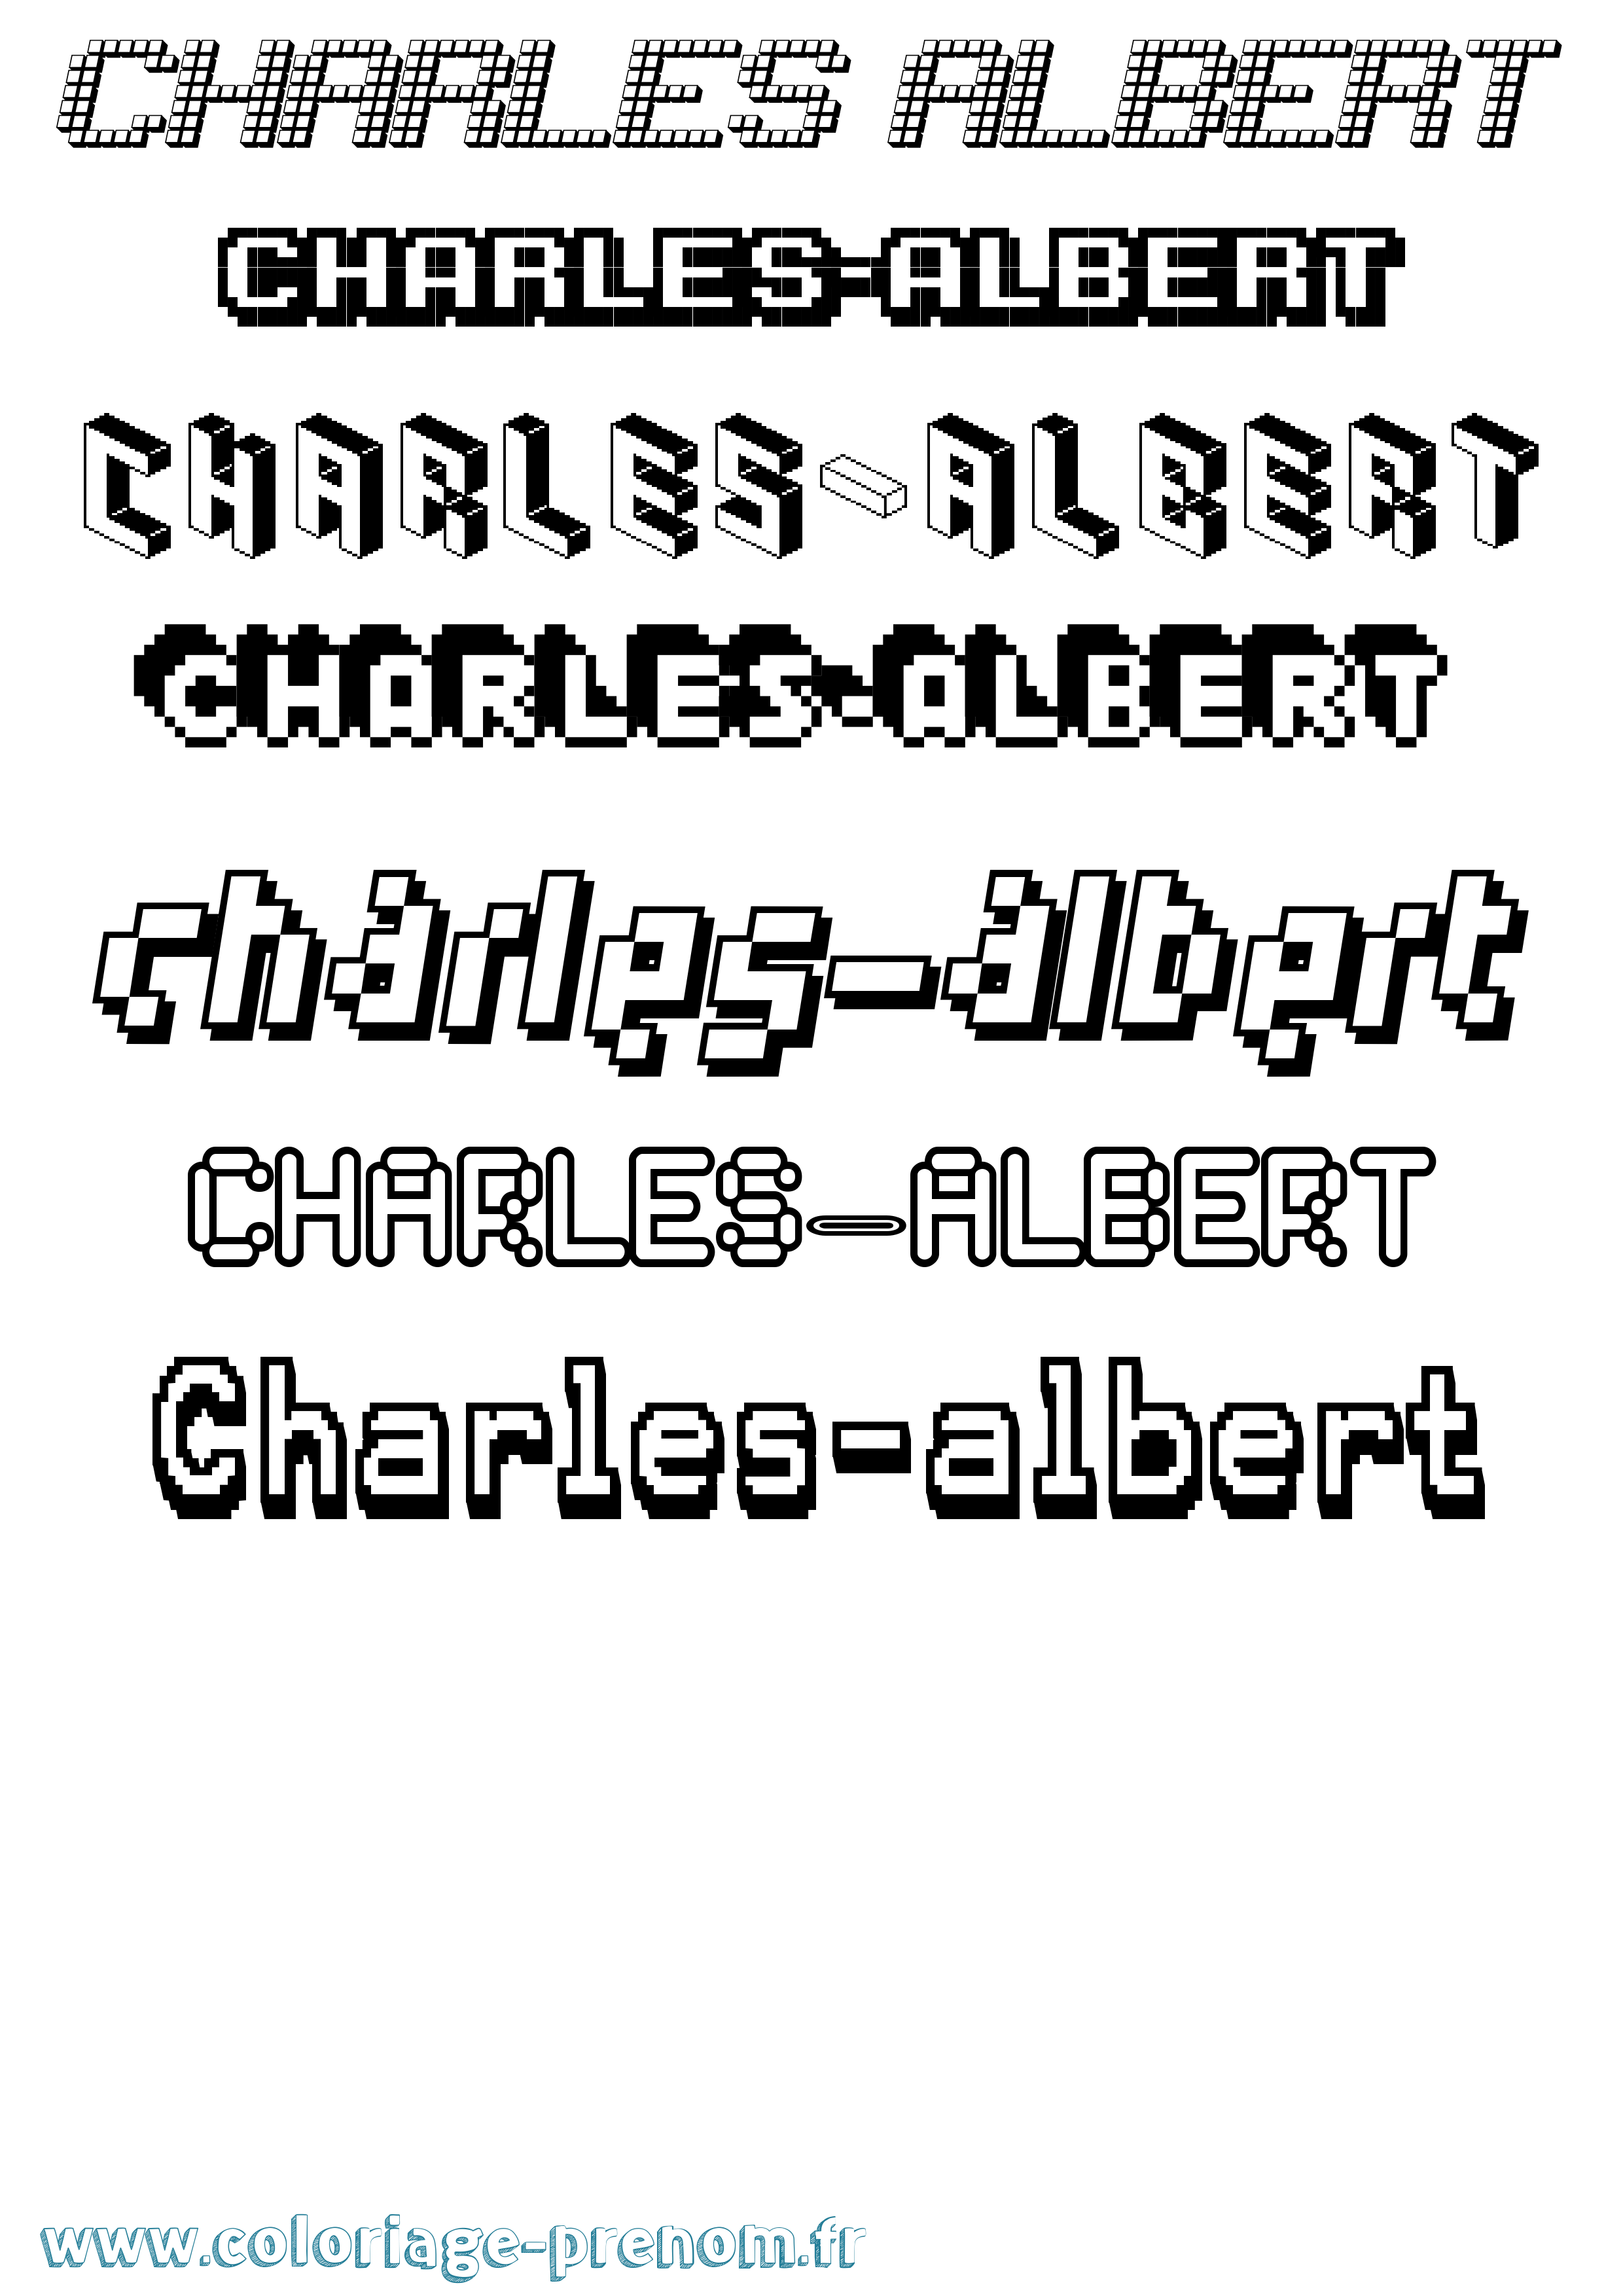 Coloriage prénom Charles-Albert Pixel